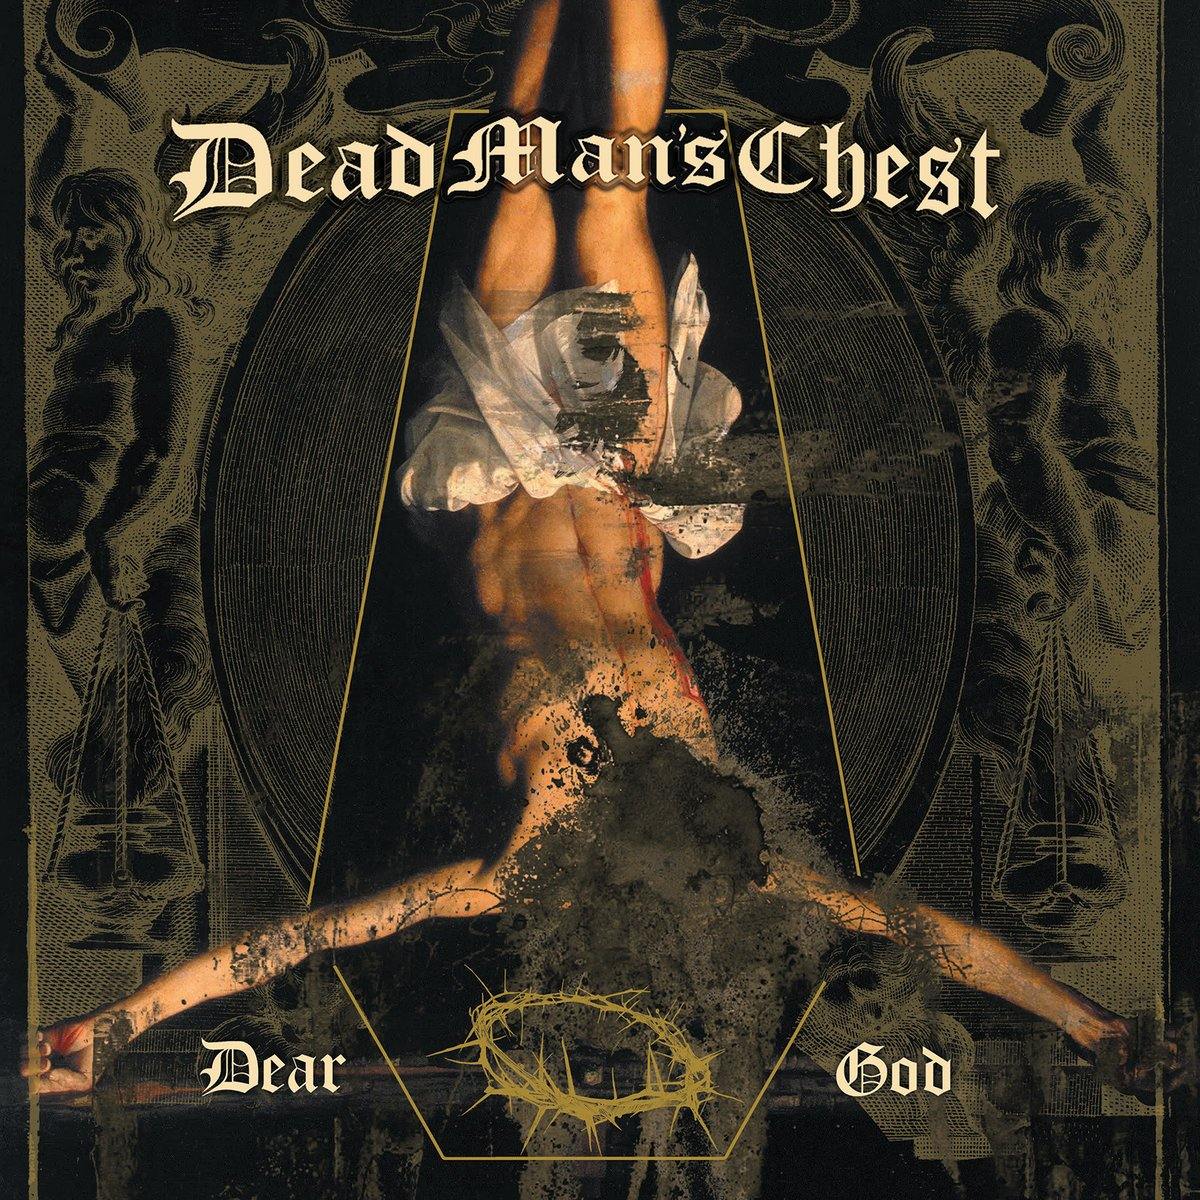 Buy – Dead Man's Chest "Dear God" 7" – Band & Music Merch – Cold Cuts Merch